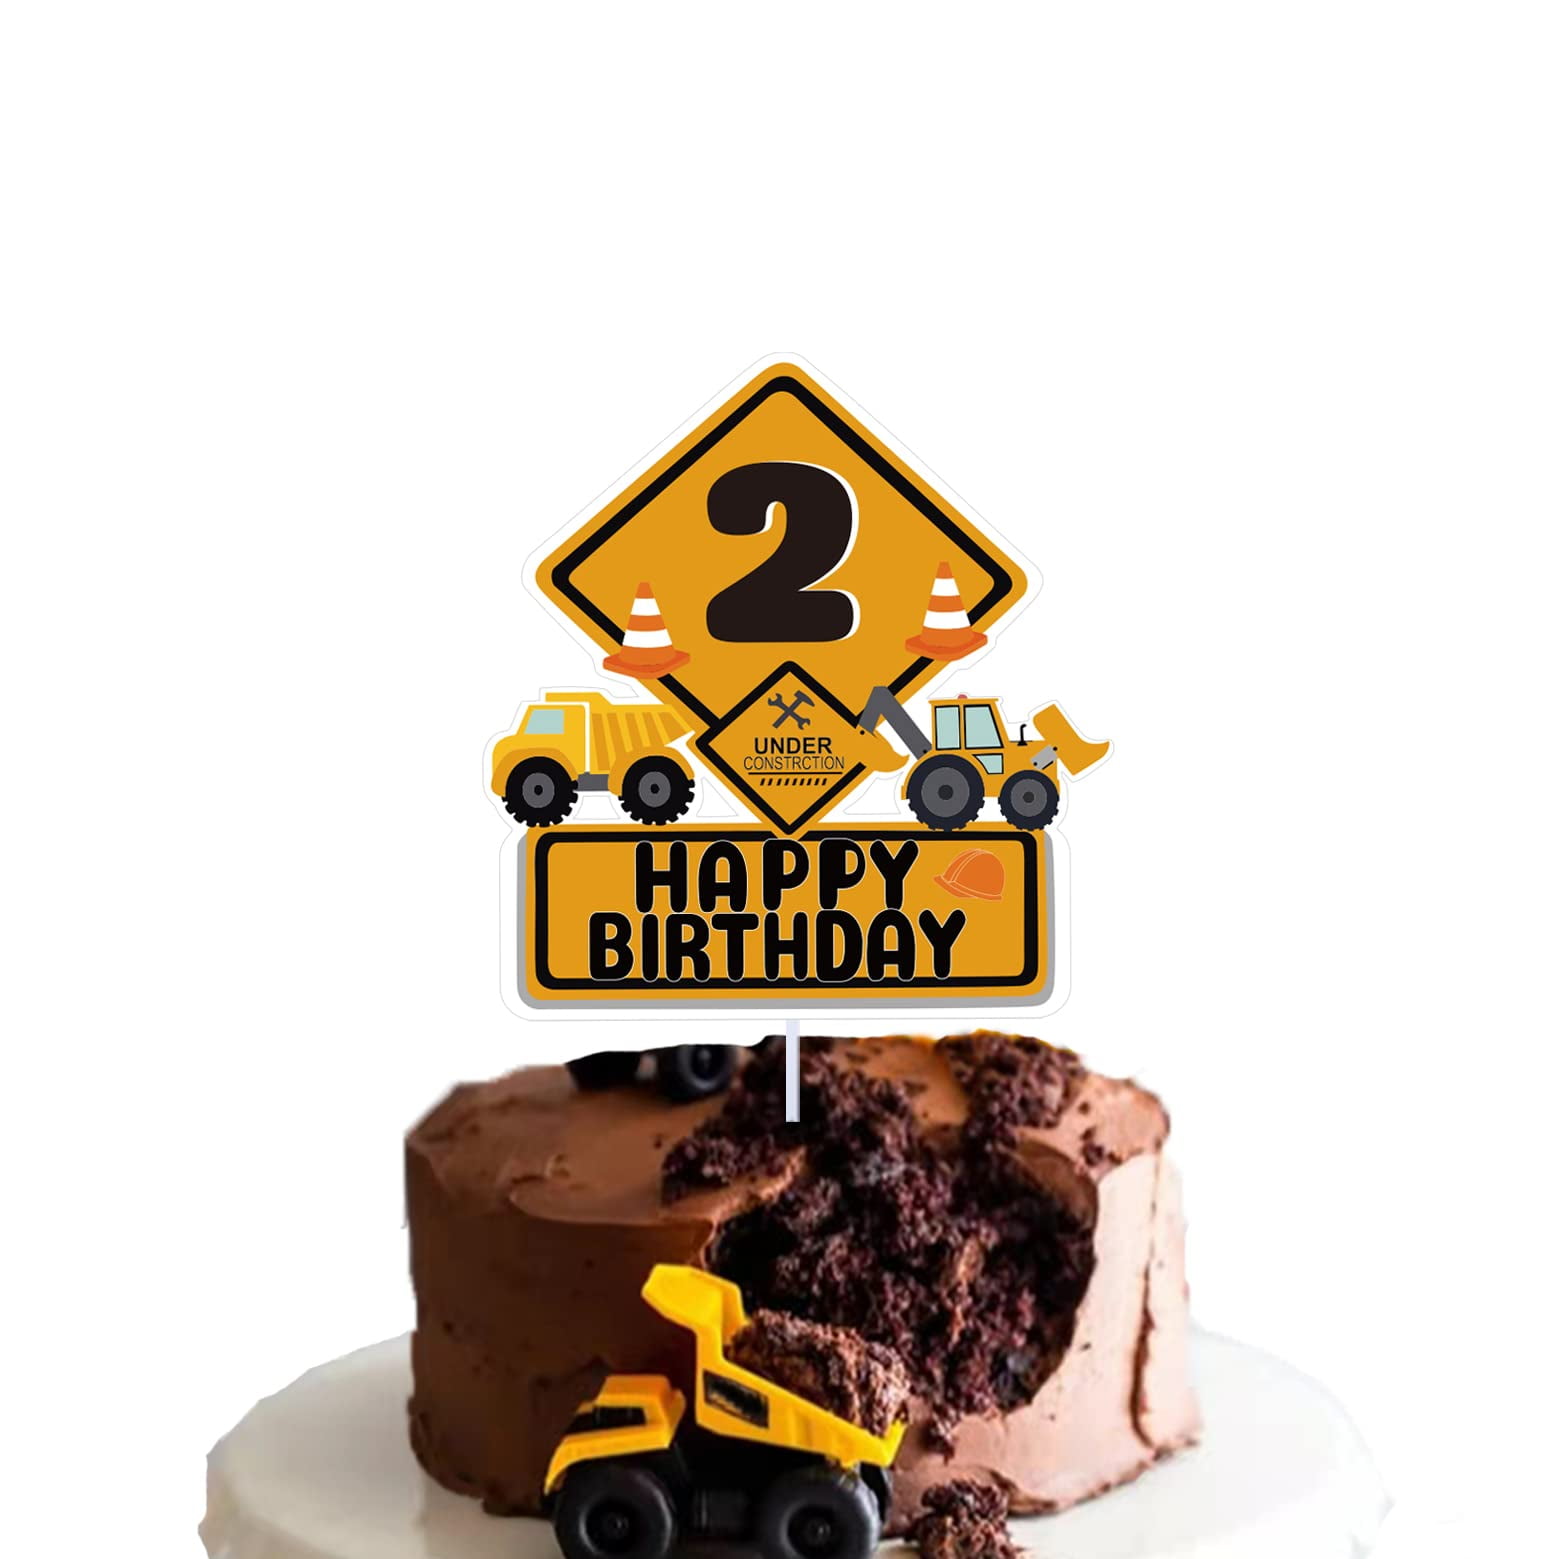 1st Birthday 2 Tier Designer Cake Delivery in Delhi NCR - ₹7,499.00 Cake  Express